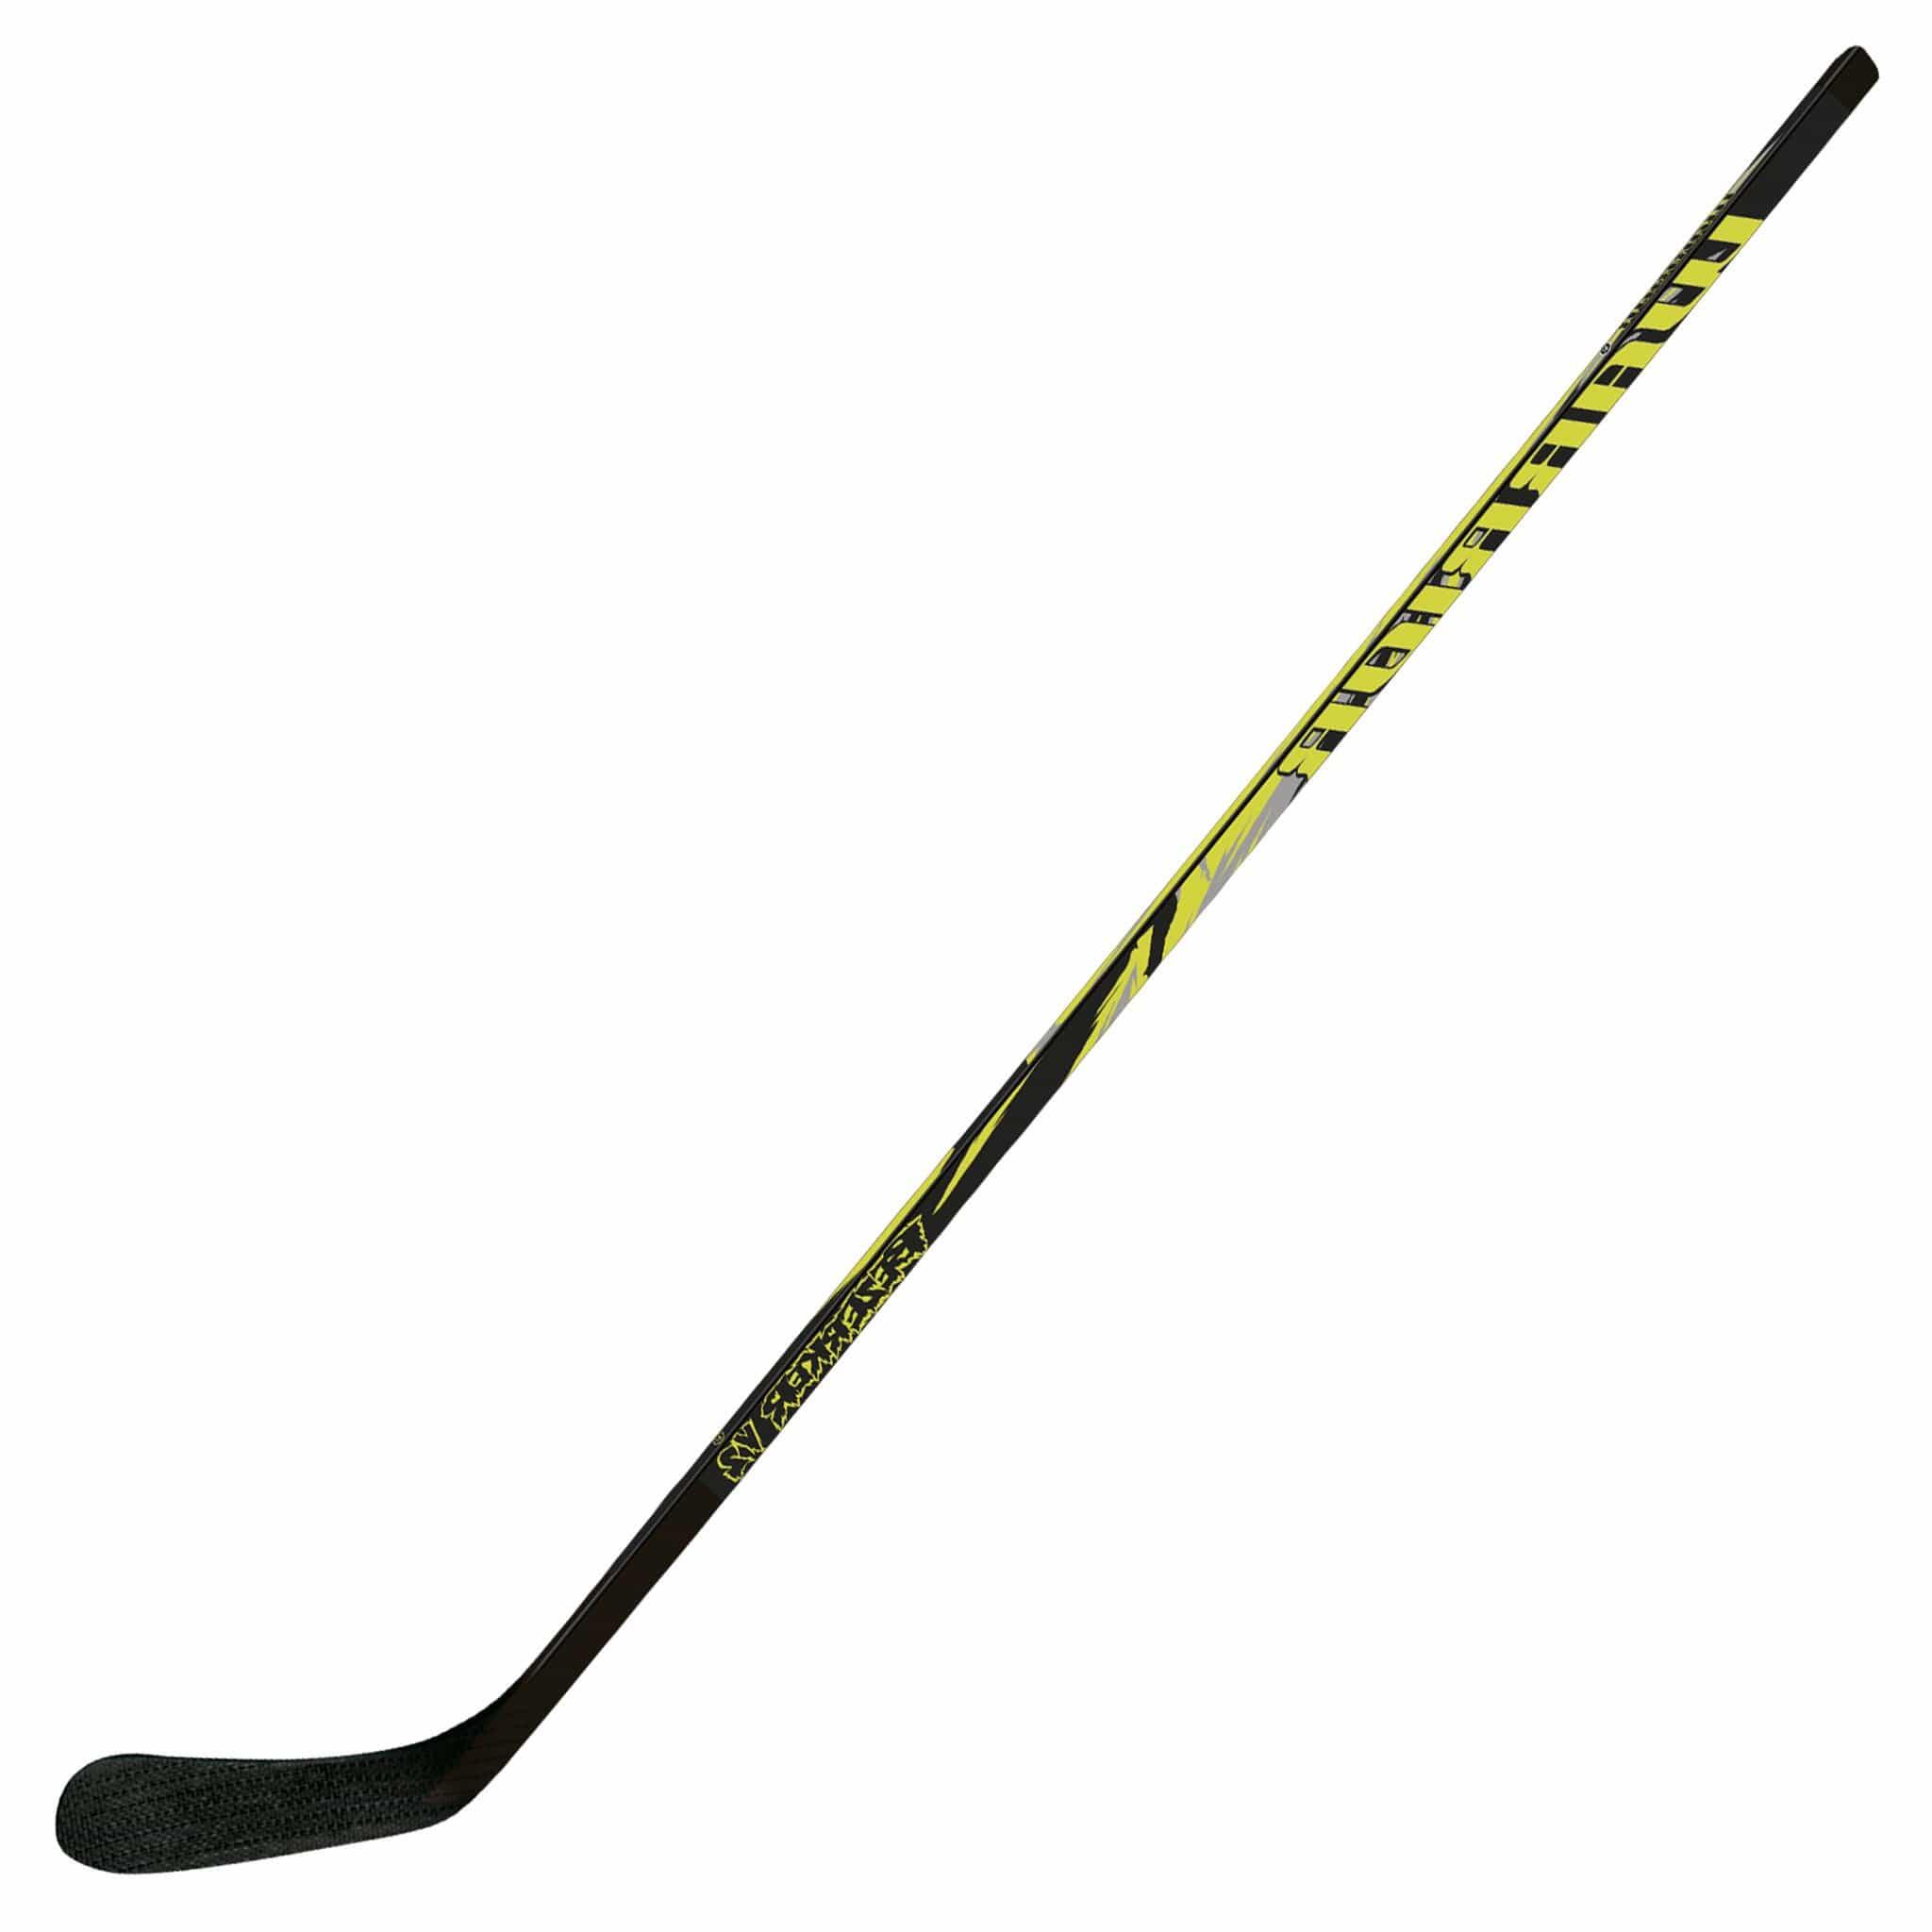 WARRIOR Warrior Bezerker V2 Wooden Hockey Stick - Senior Left Hand